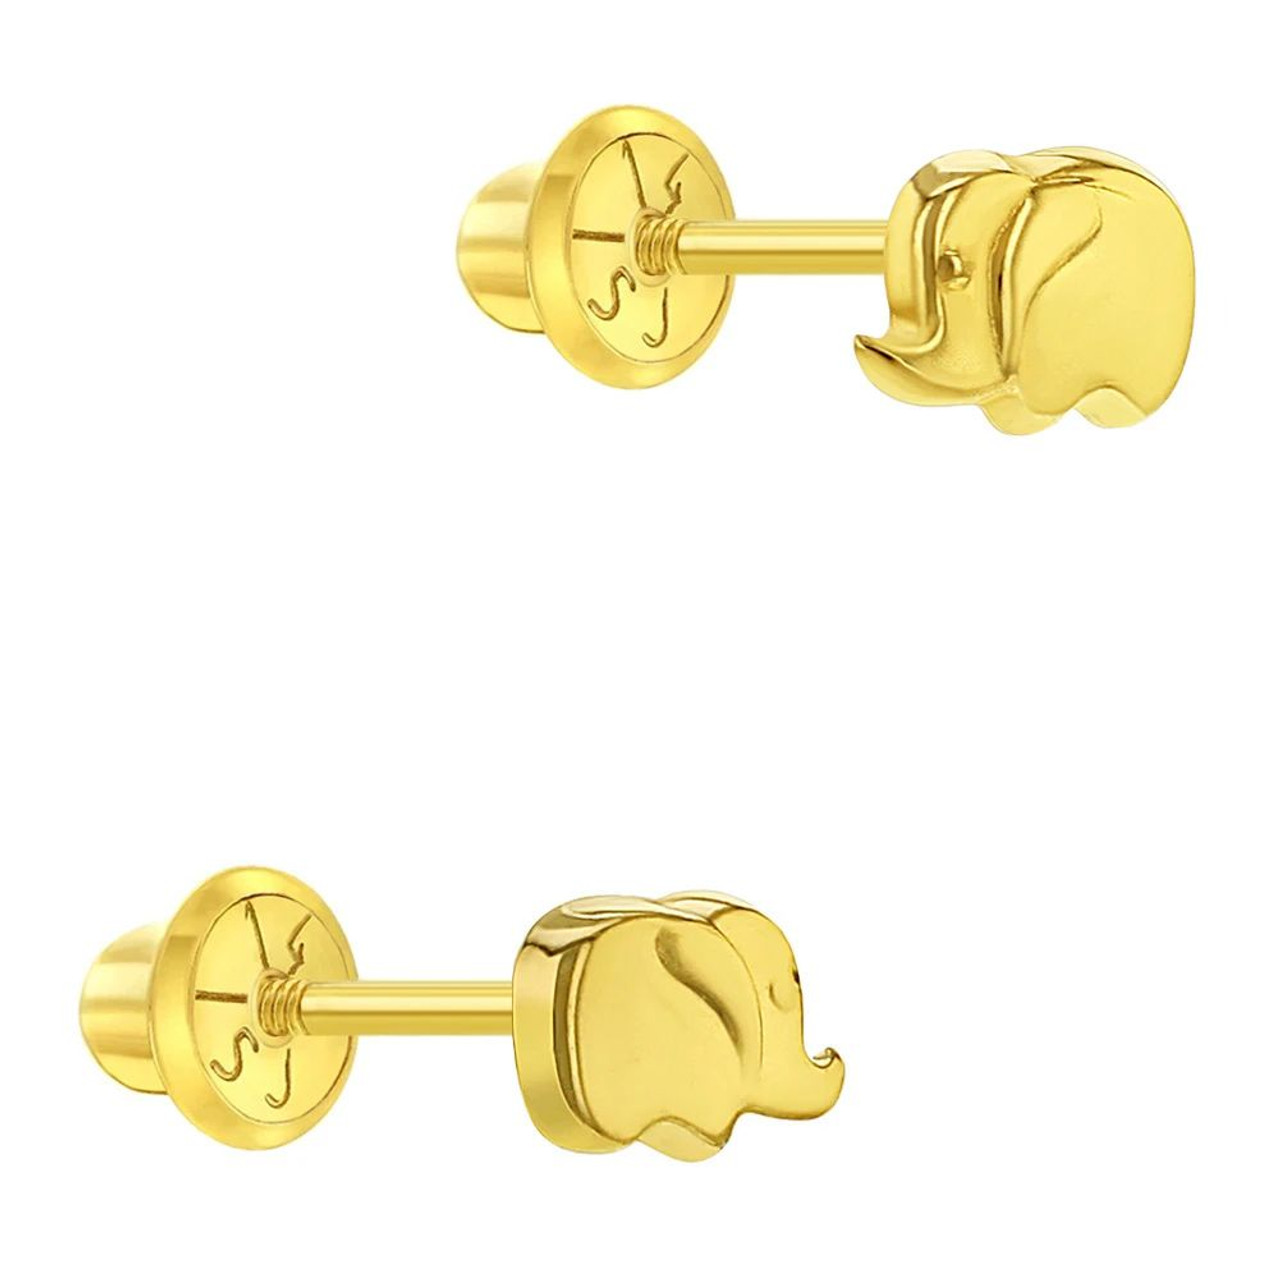 Baby Earrings | Baby earrings, Gold earrings for kids, Kids gold jewelry